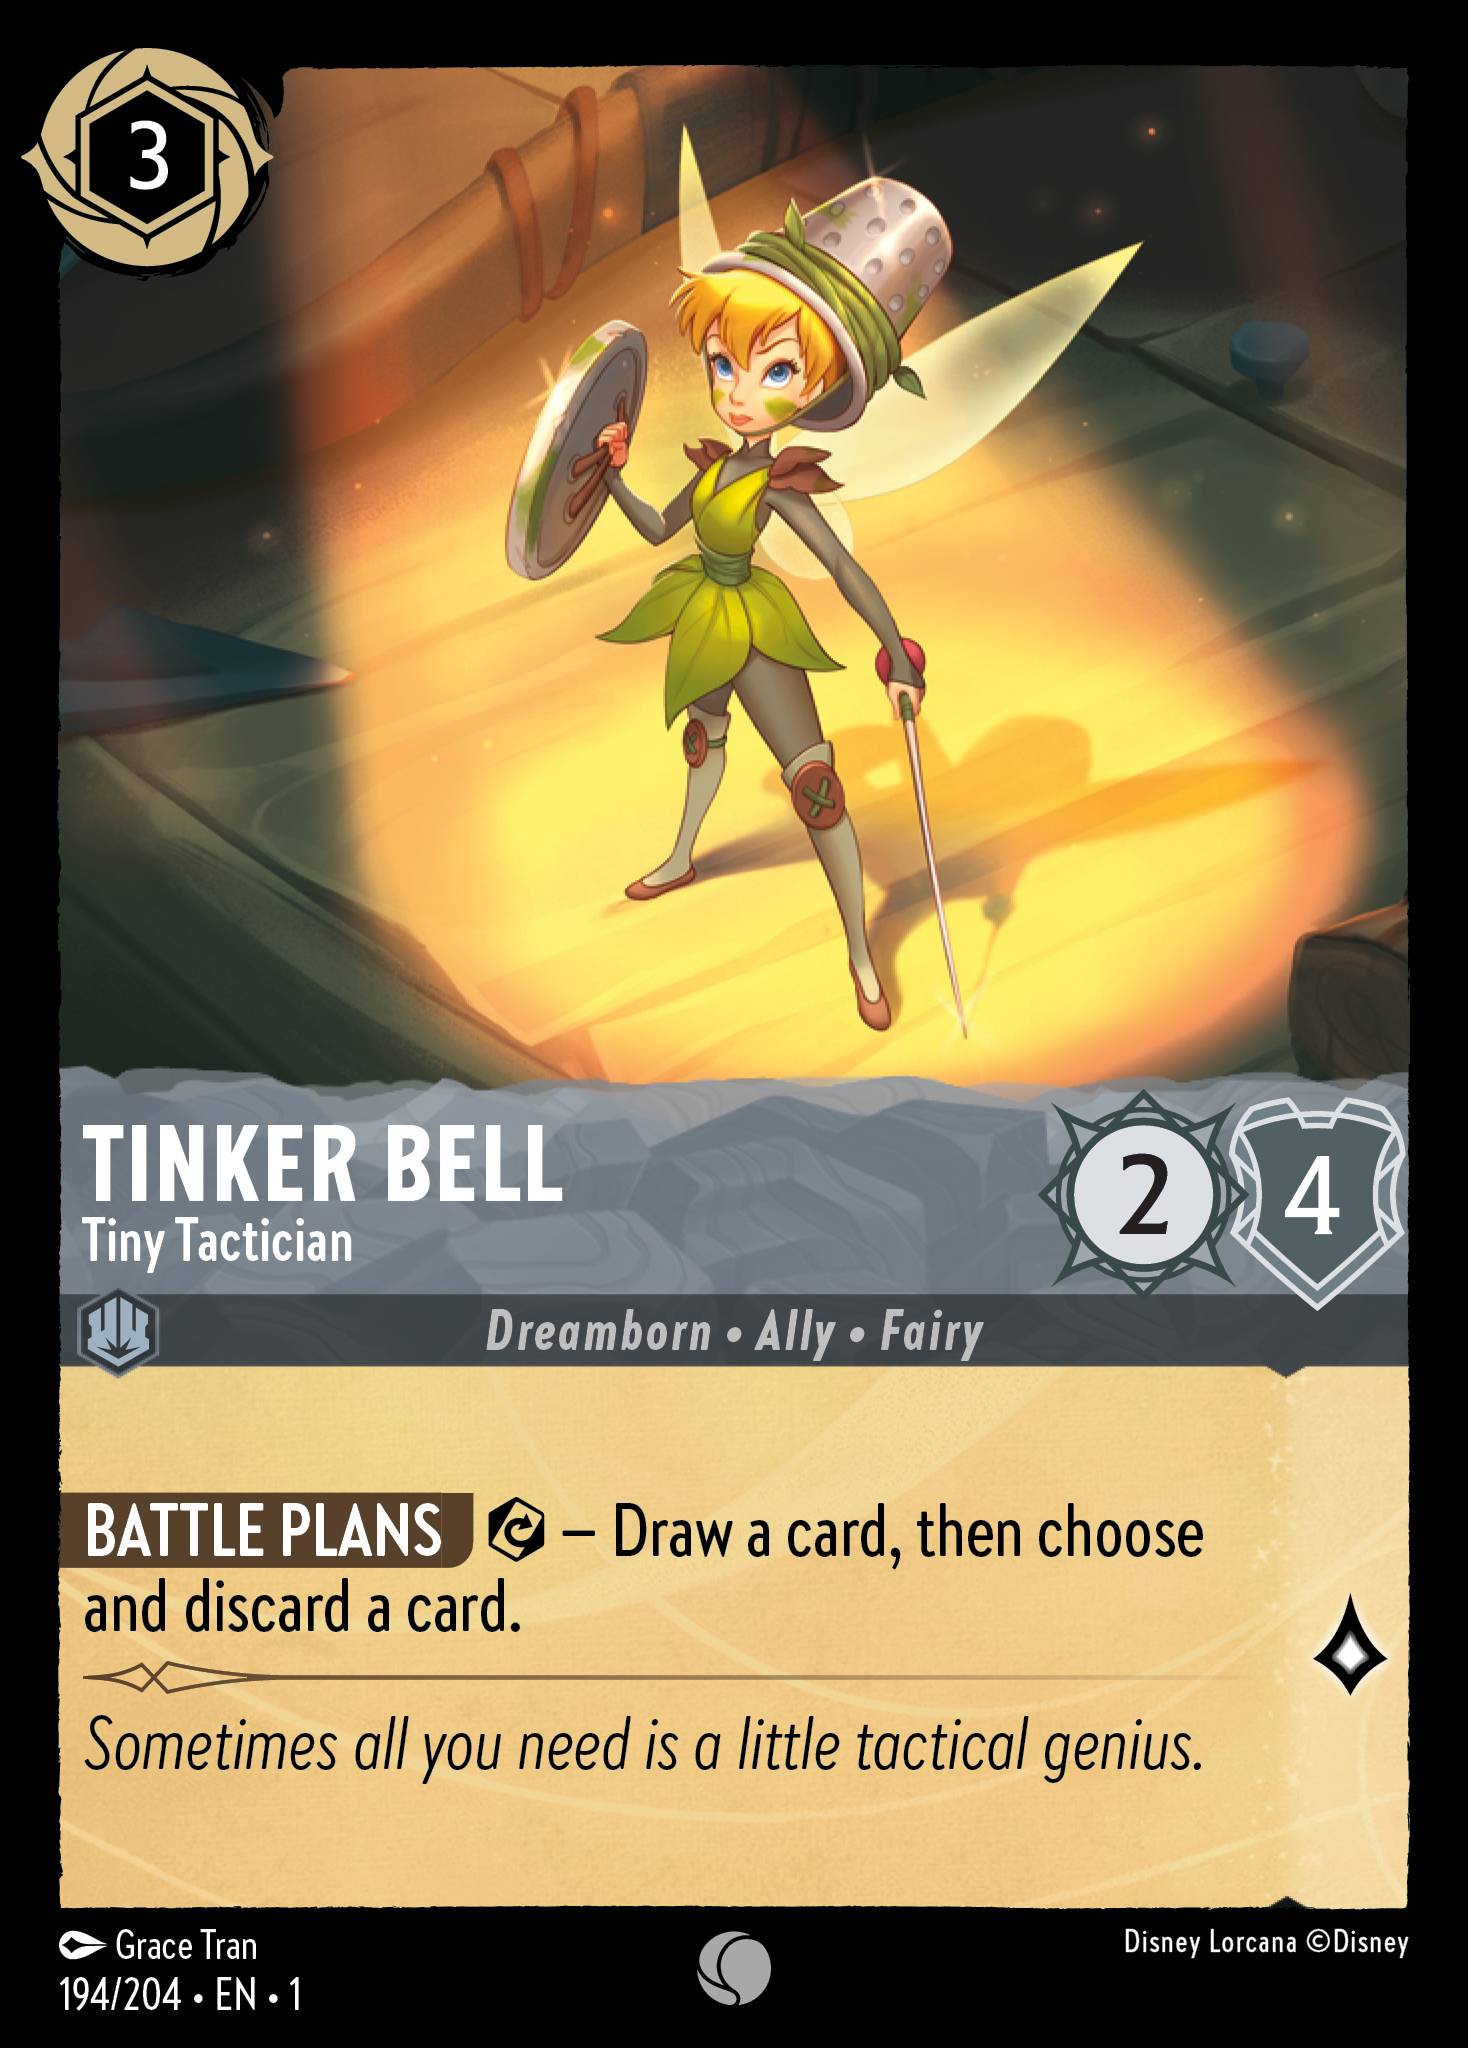 TINKER BELL - Tiny Tactician